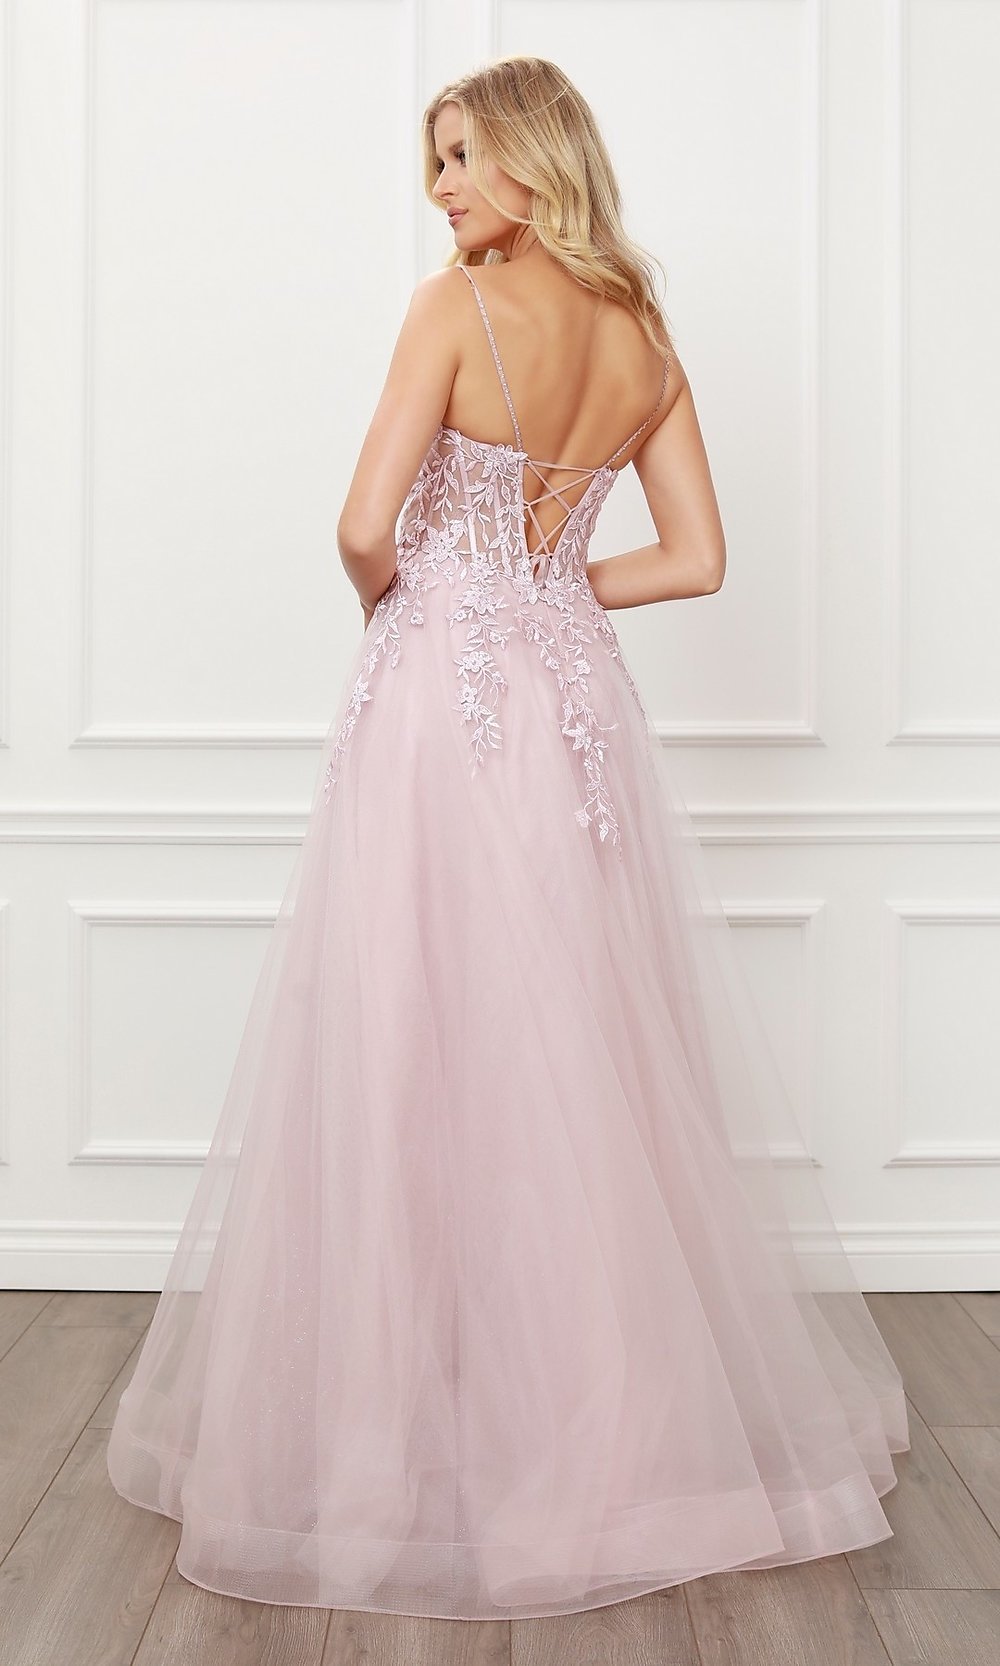 Glitter Applique Corset Ball Gown | David's Bridal